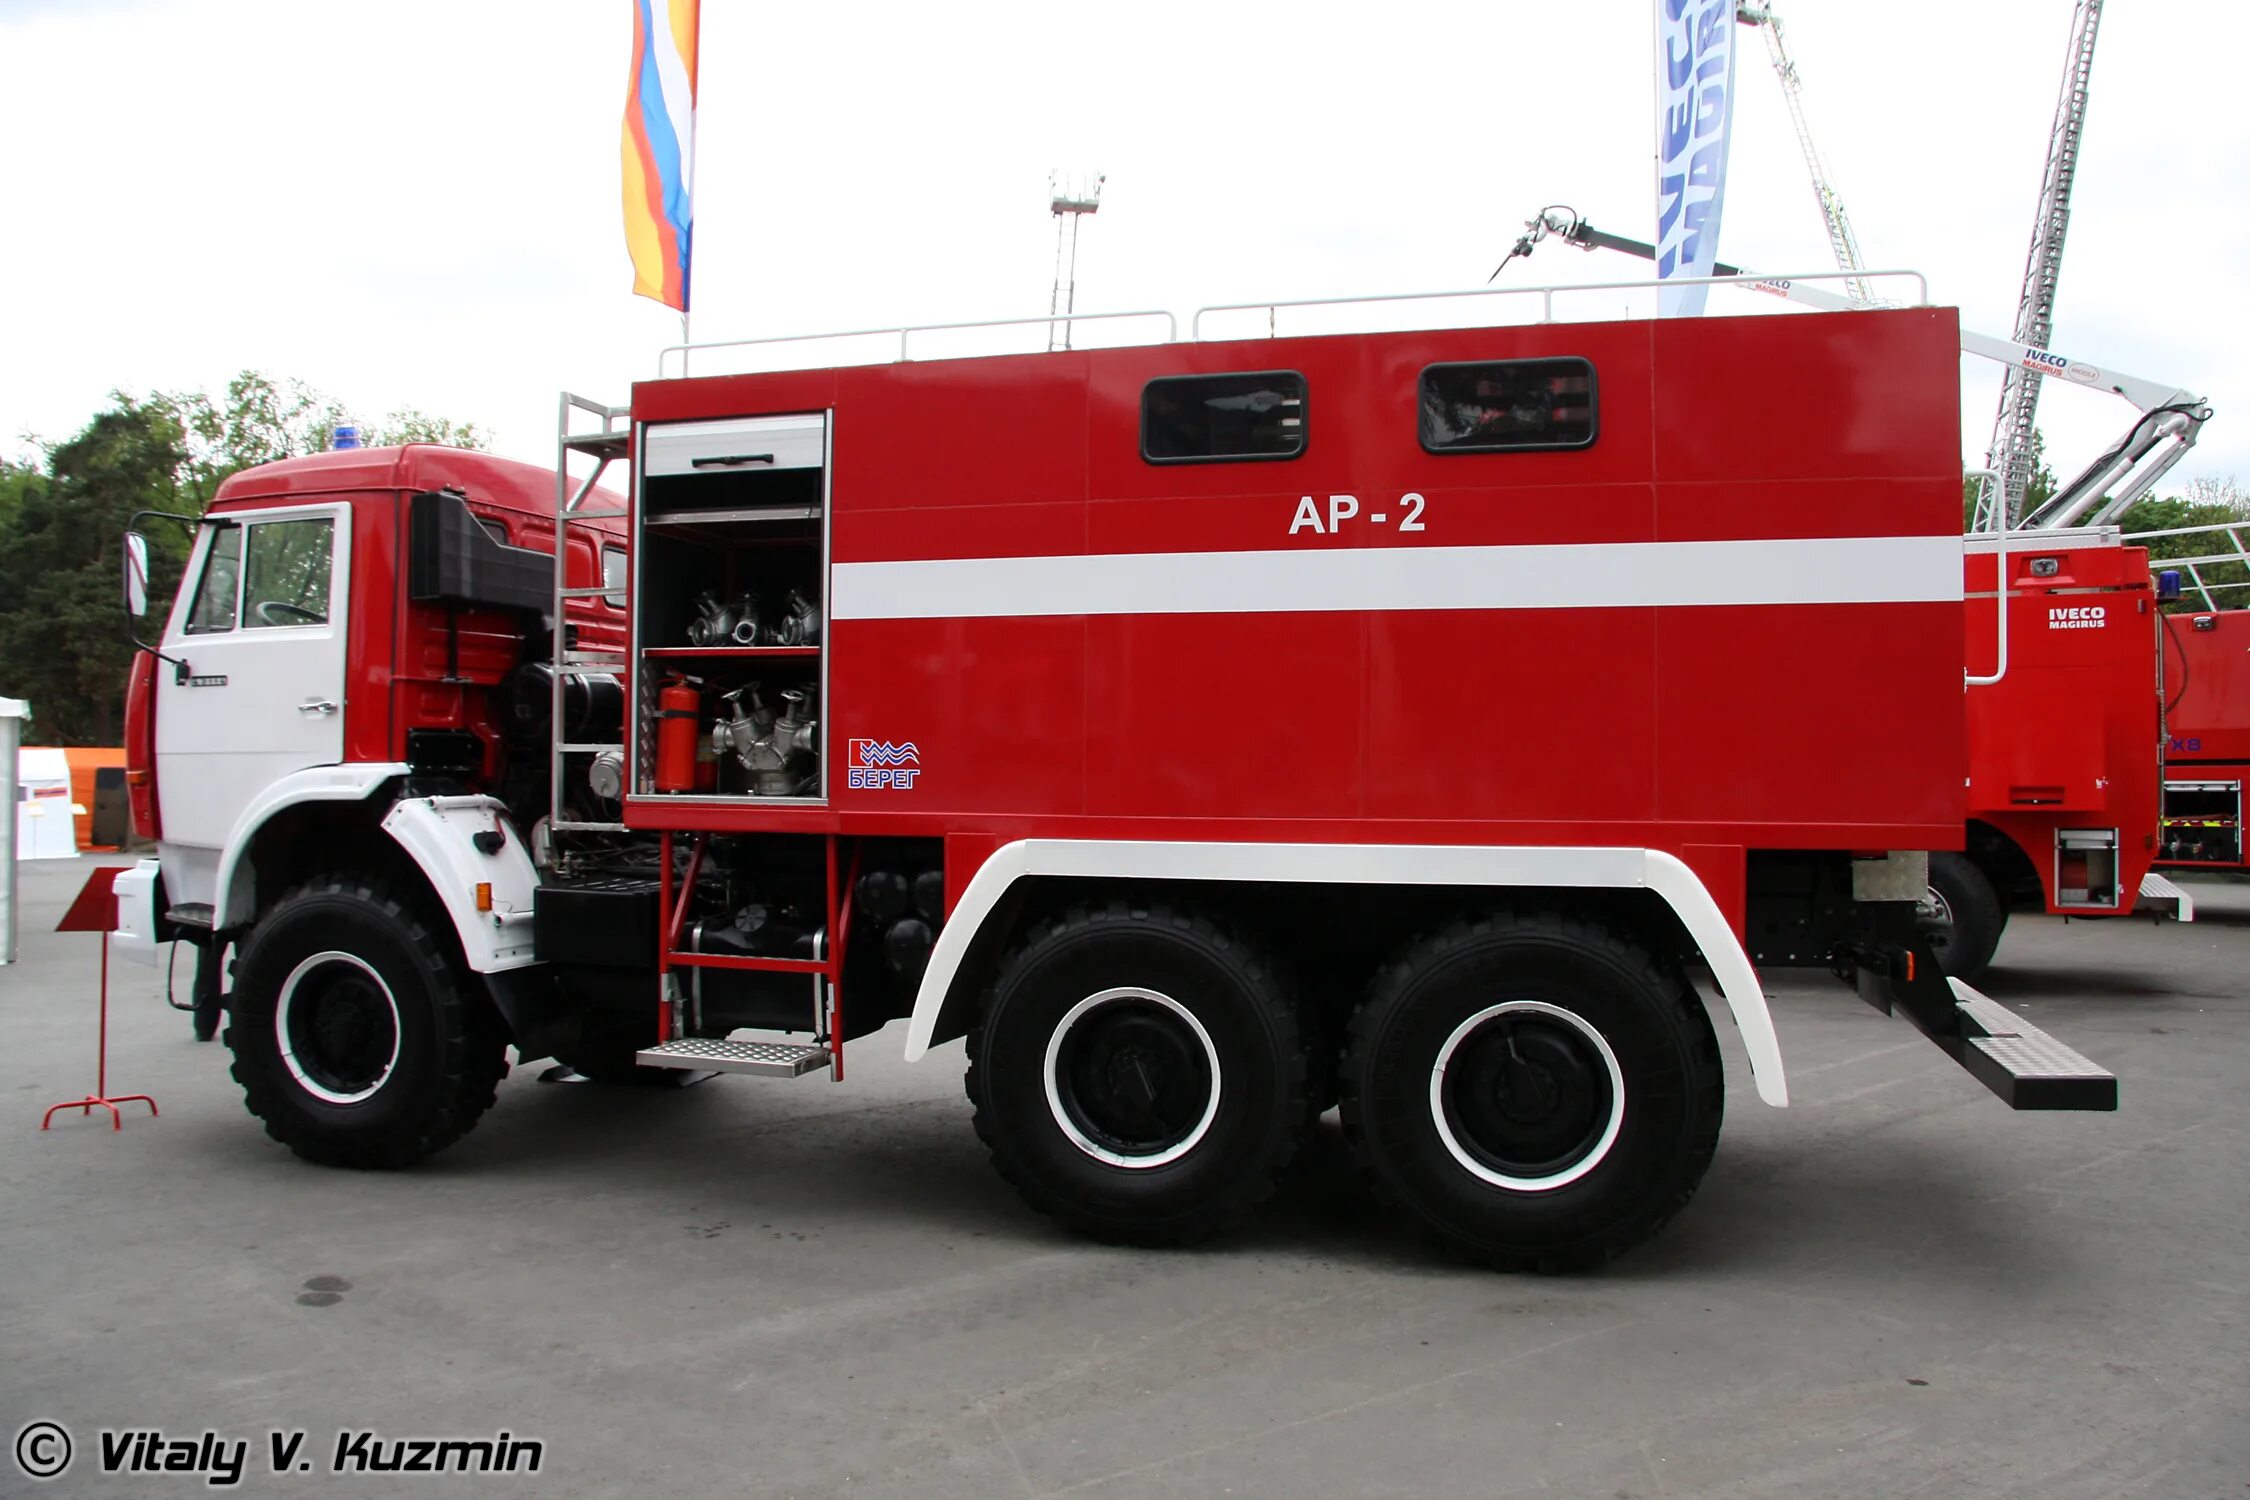 Ар пожарный автомобиль. Пожарный рукавный автомобиль ар-2. Ар-2 (КАМАЗ-43101). Ар-2 КАМАЗ 43502. КАМАЗ 43114 пожарный автомобиль.